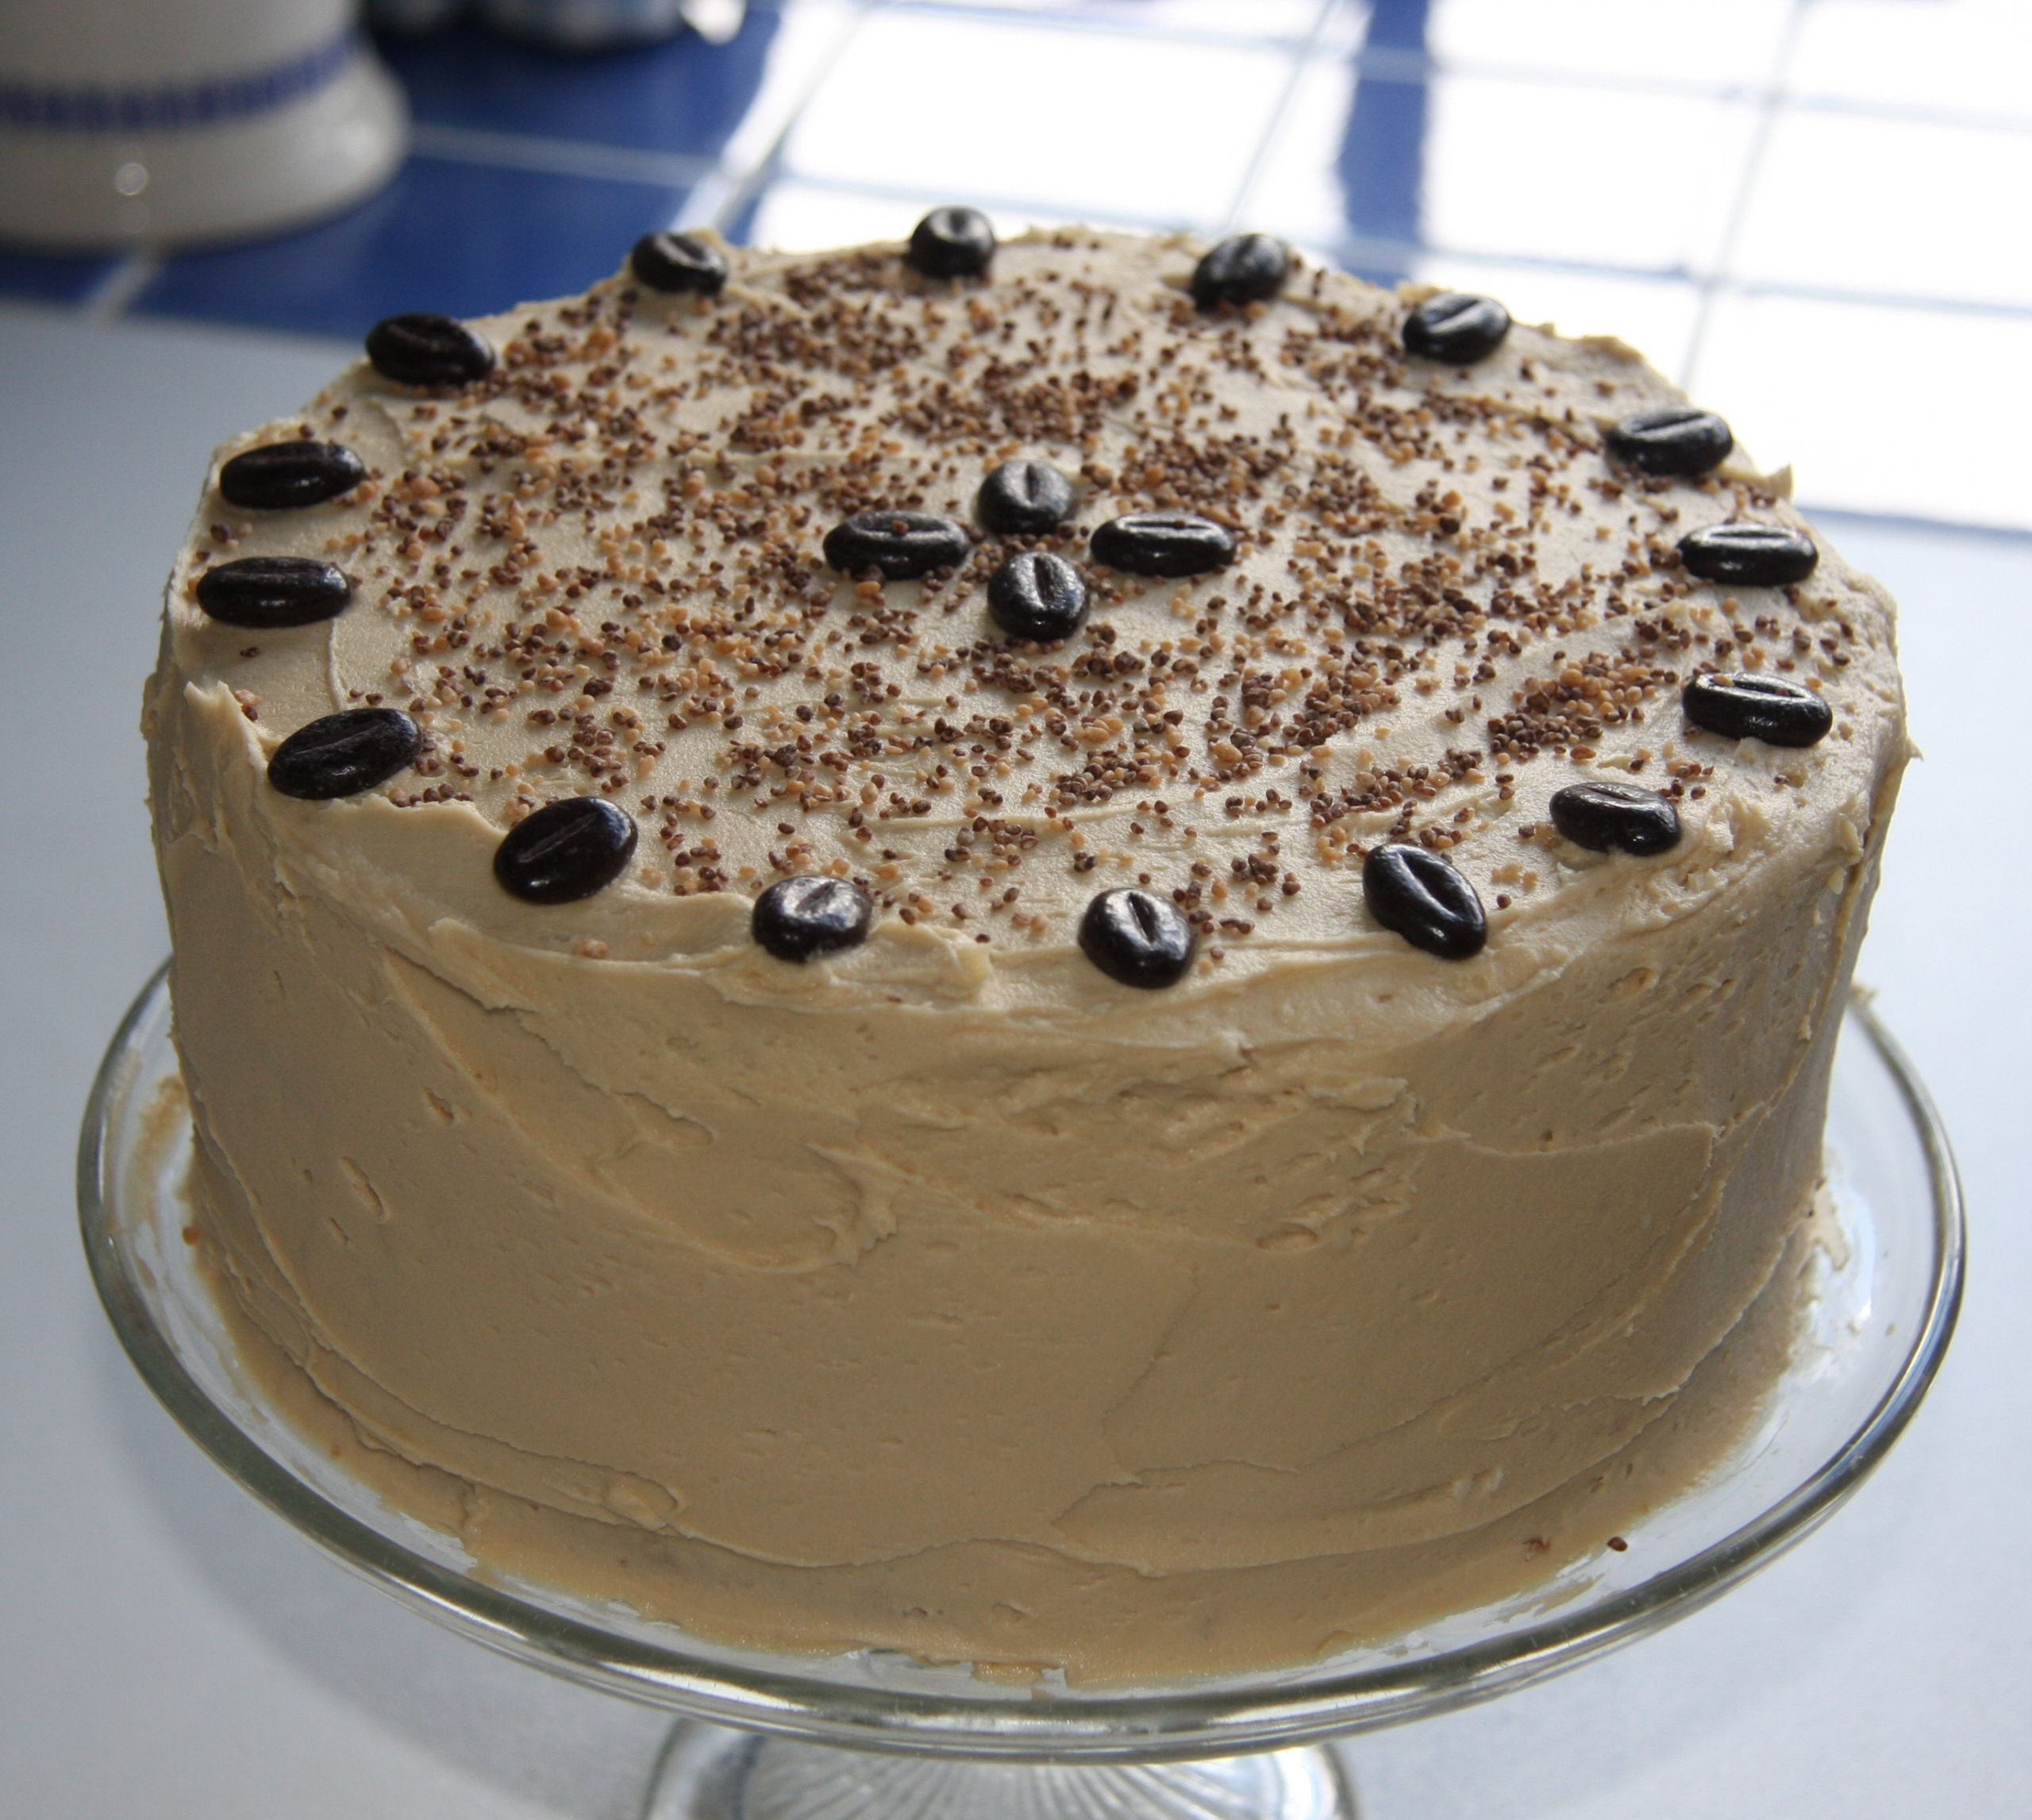 Coffee Birthday Cake
 Baking Birthday Cakes in a New Kitchen – lovinghomemade